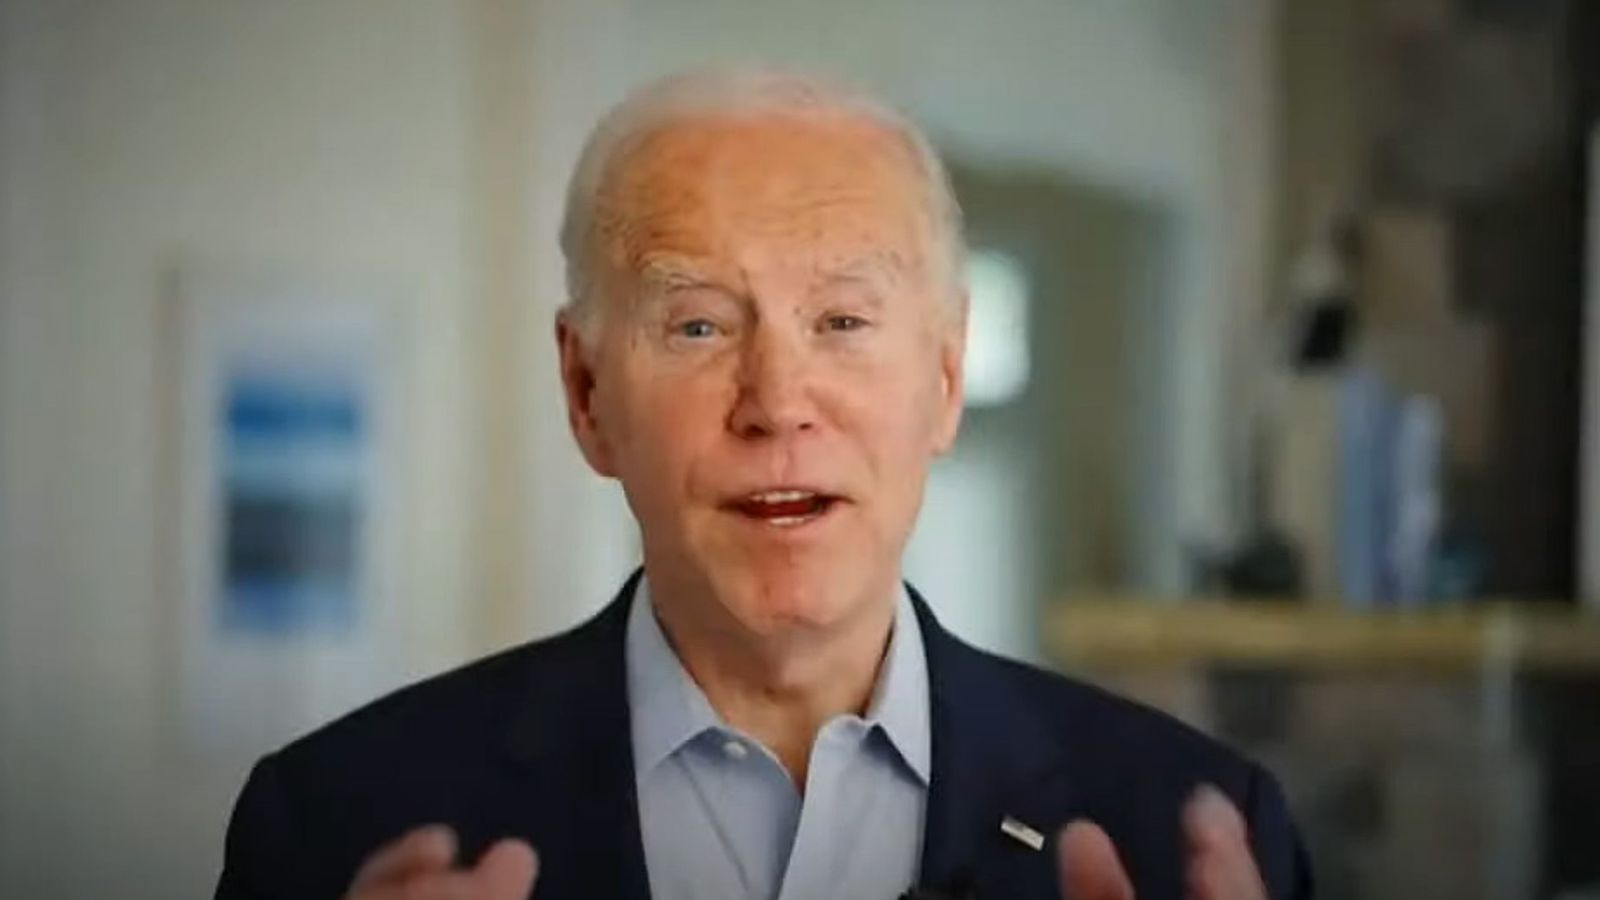 Joe Biden formally announces he will run for a second term as US president